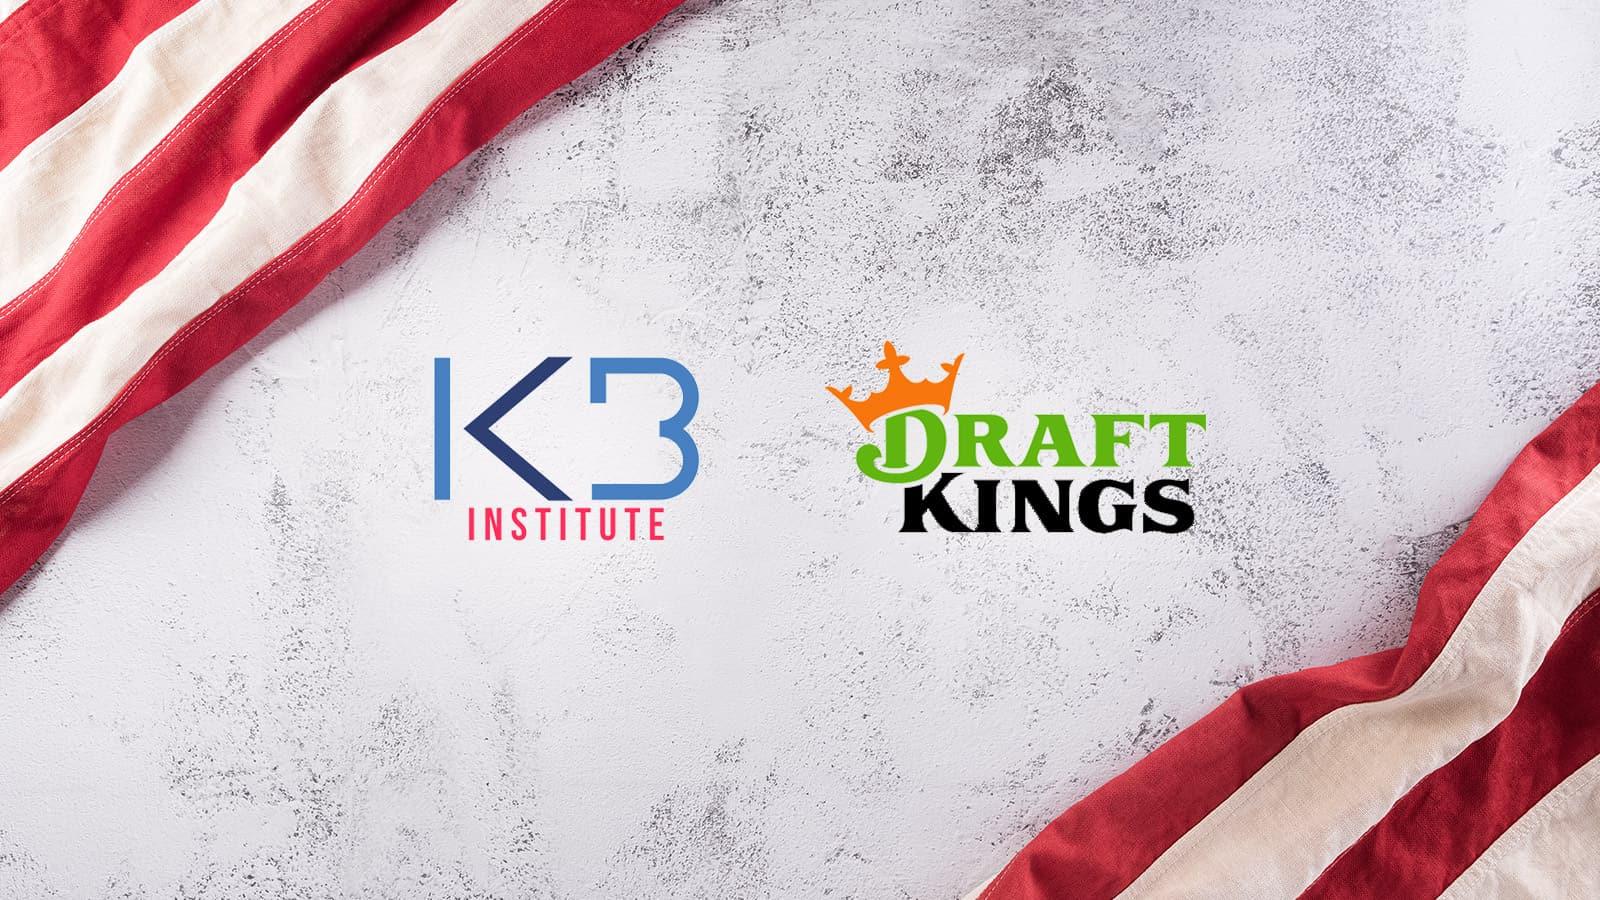 Kindbridge Behavioral Health - DraftKings and Kindbridge Research Institute Advance Veterans-Focused Responsible Gaming Research